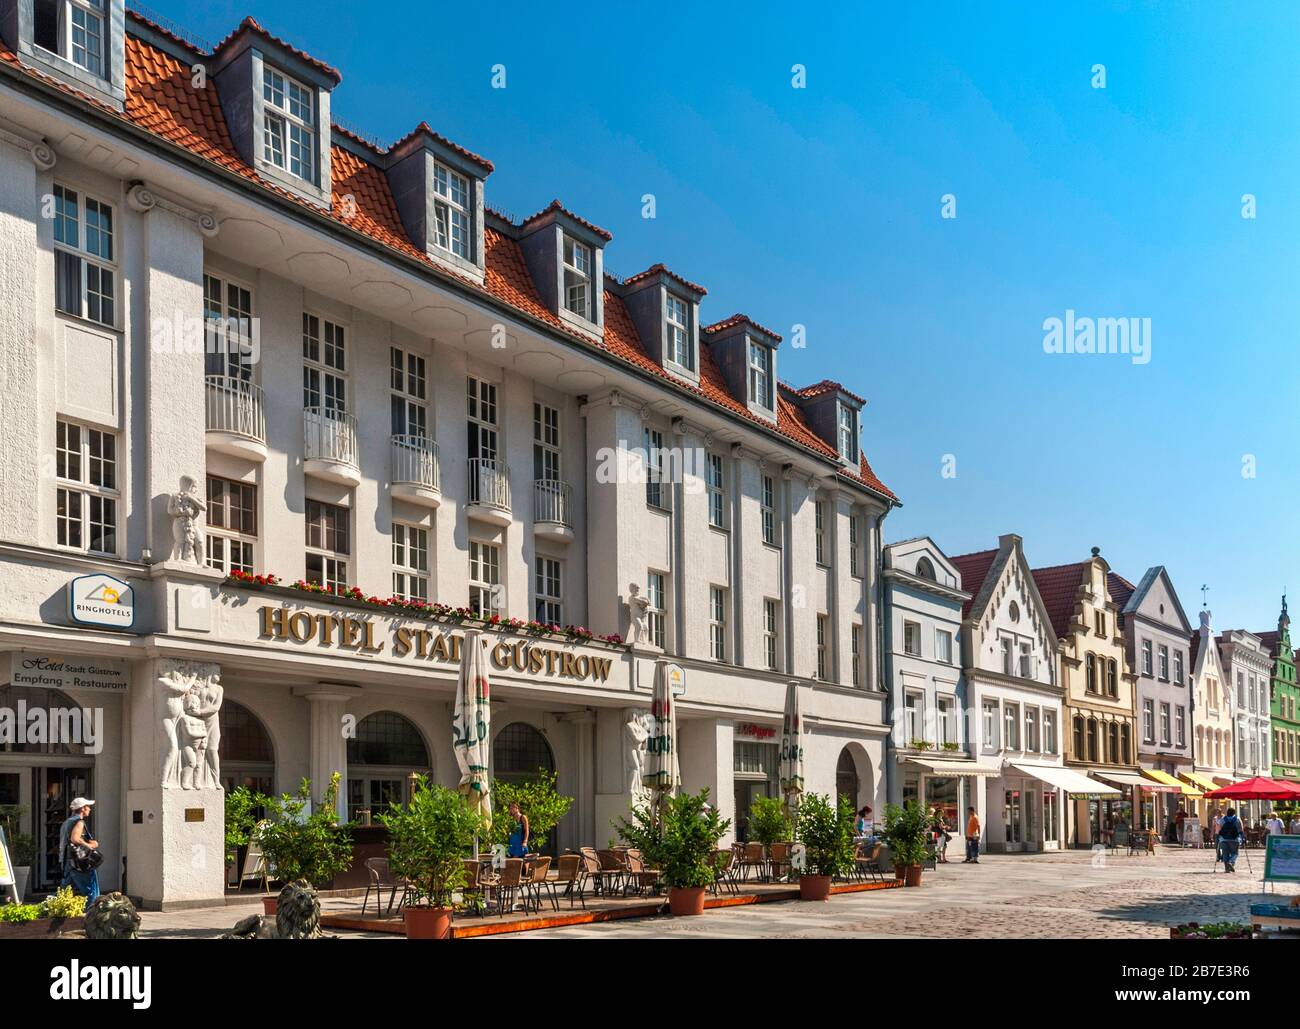 Hotel Stadt Güstrow Nella Piazza Del Mercato Di Güstrow A Meclemburgo-Pomerania Occidentale, Germania Foto Stock